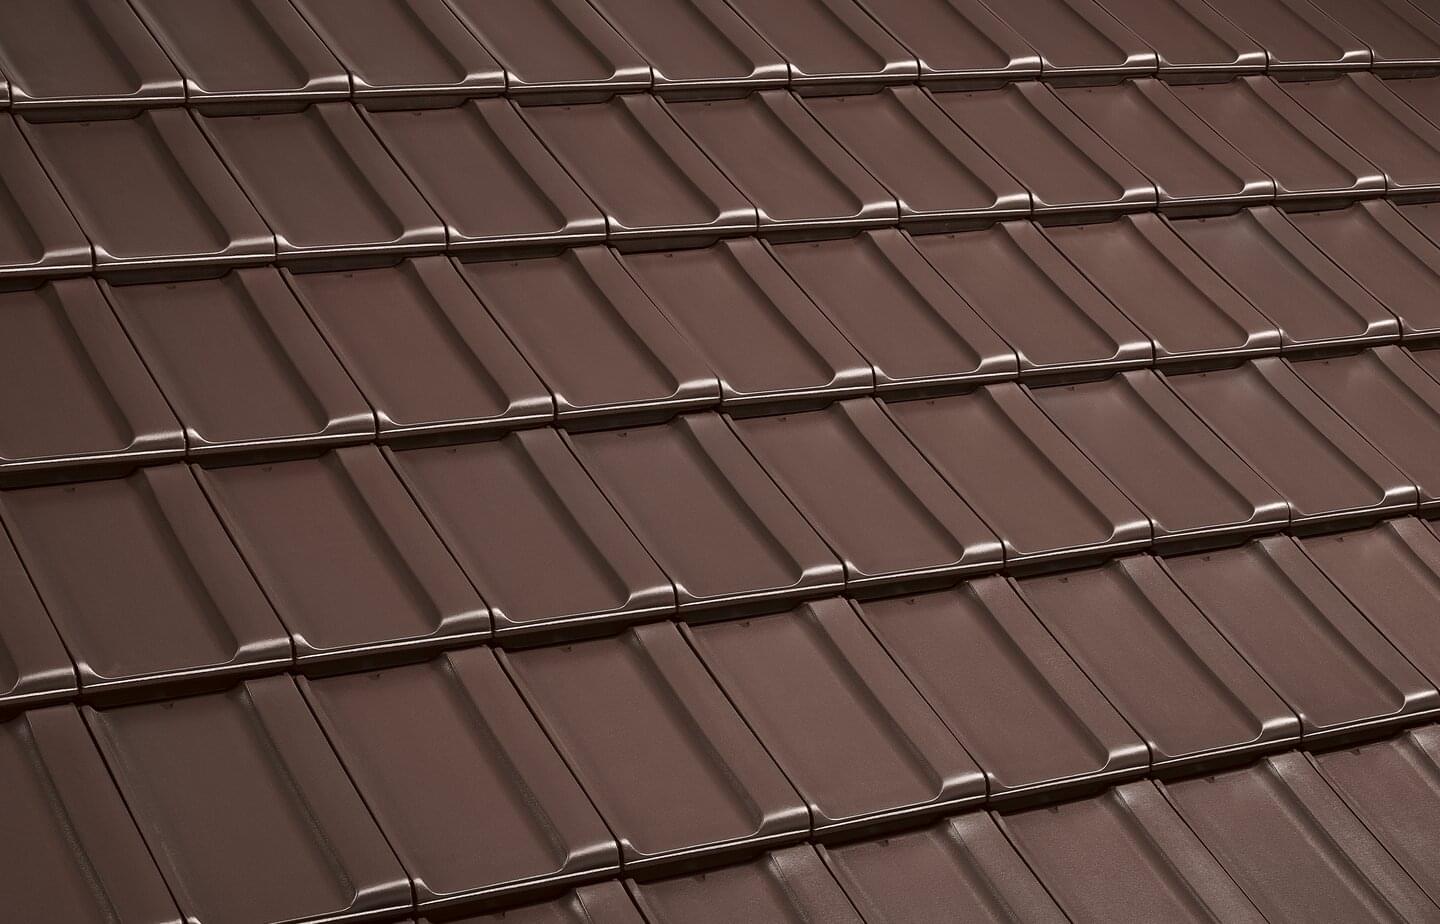 Reformpfanne SL - Brazil brown | Image roof surface | © © ERLUS AG 2021